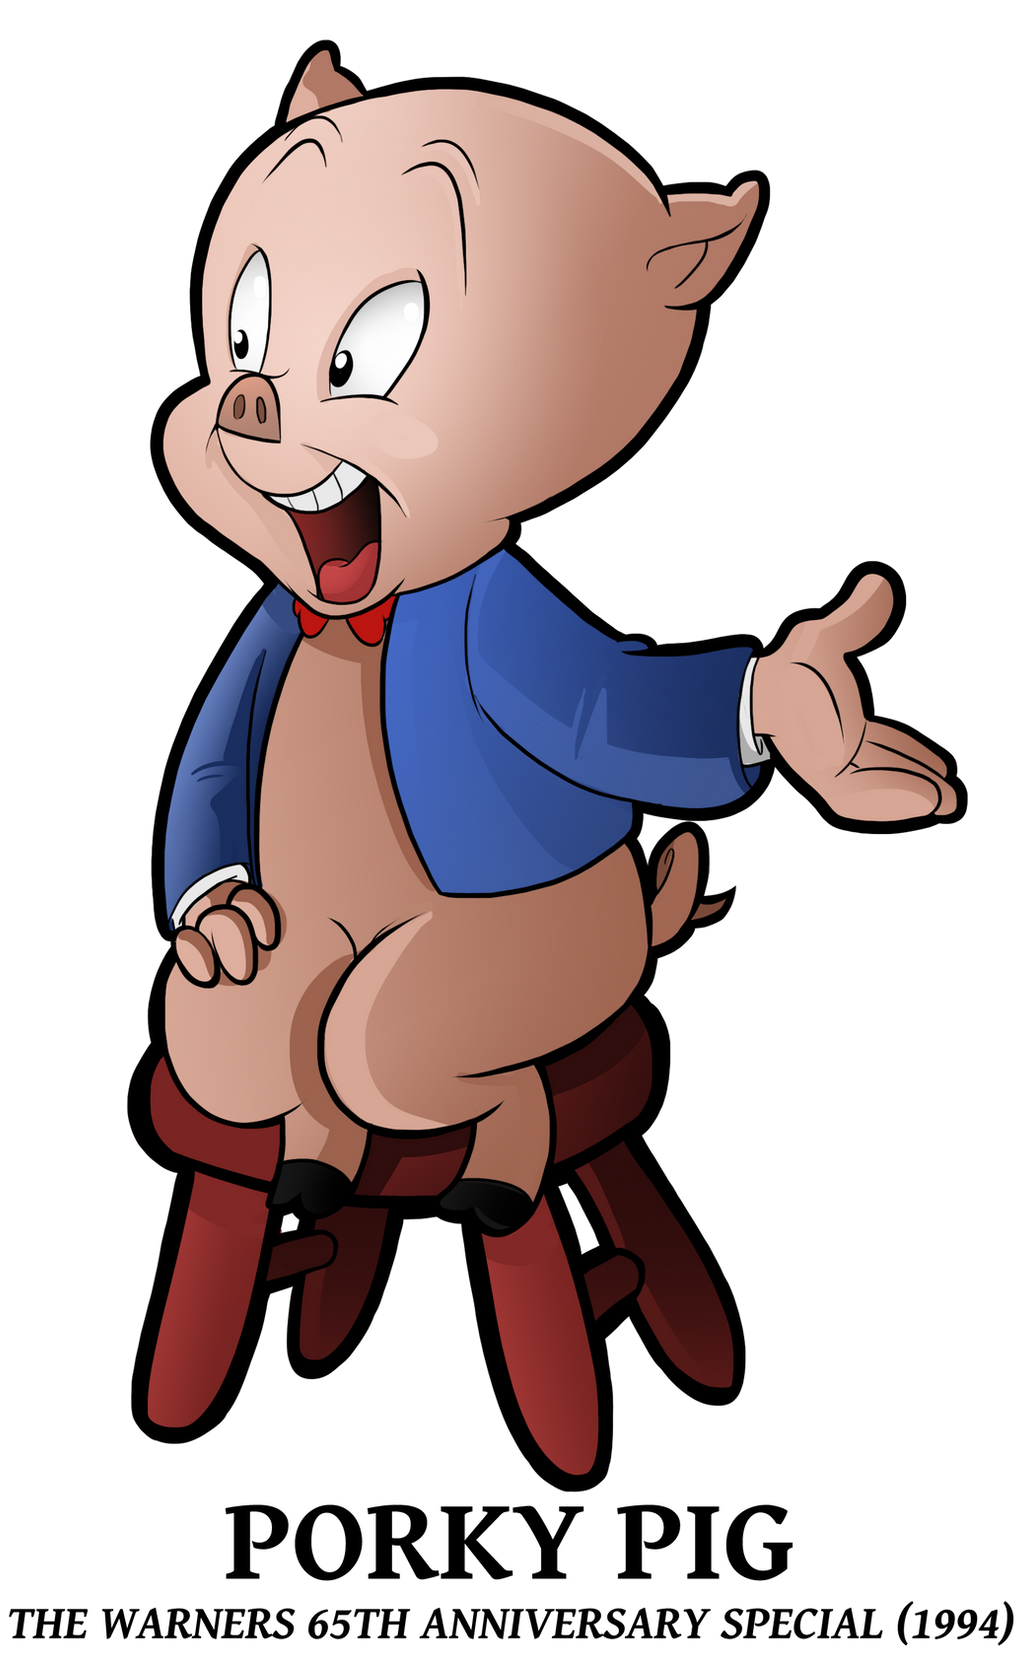 Animaniacs Cameos - Porky Pig